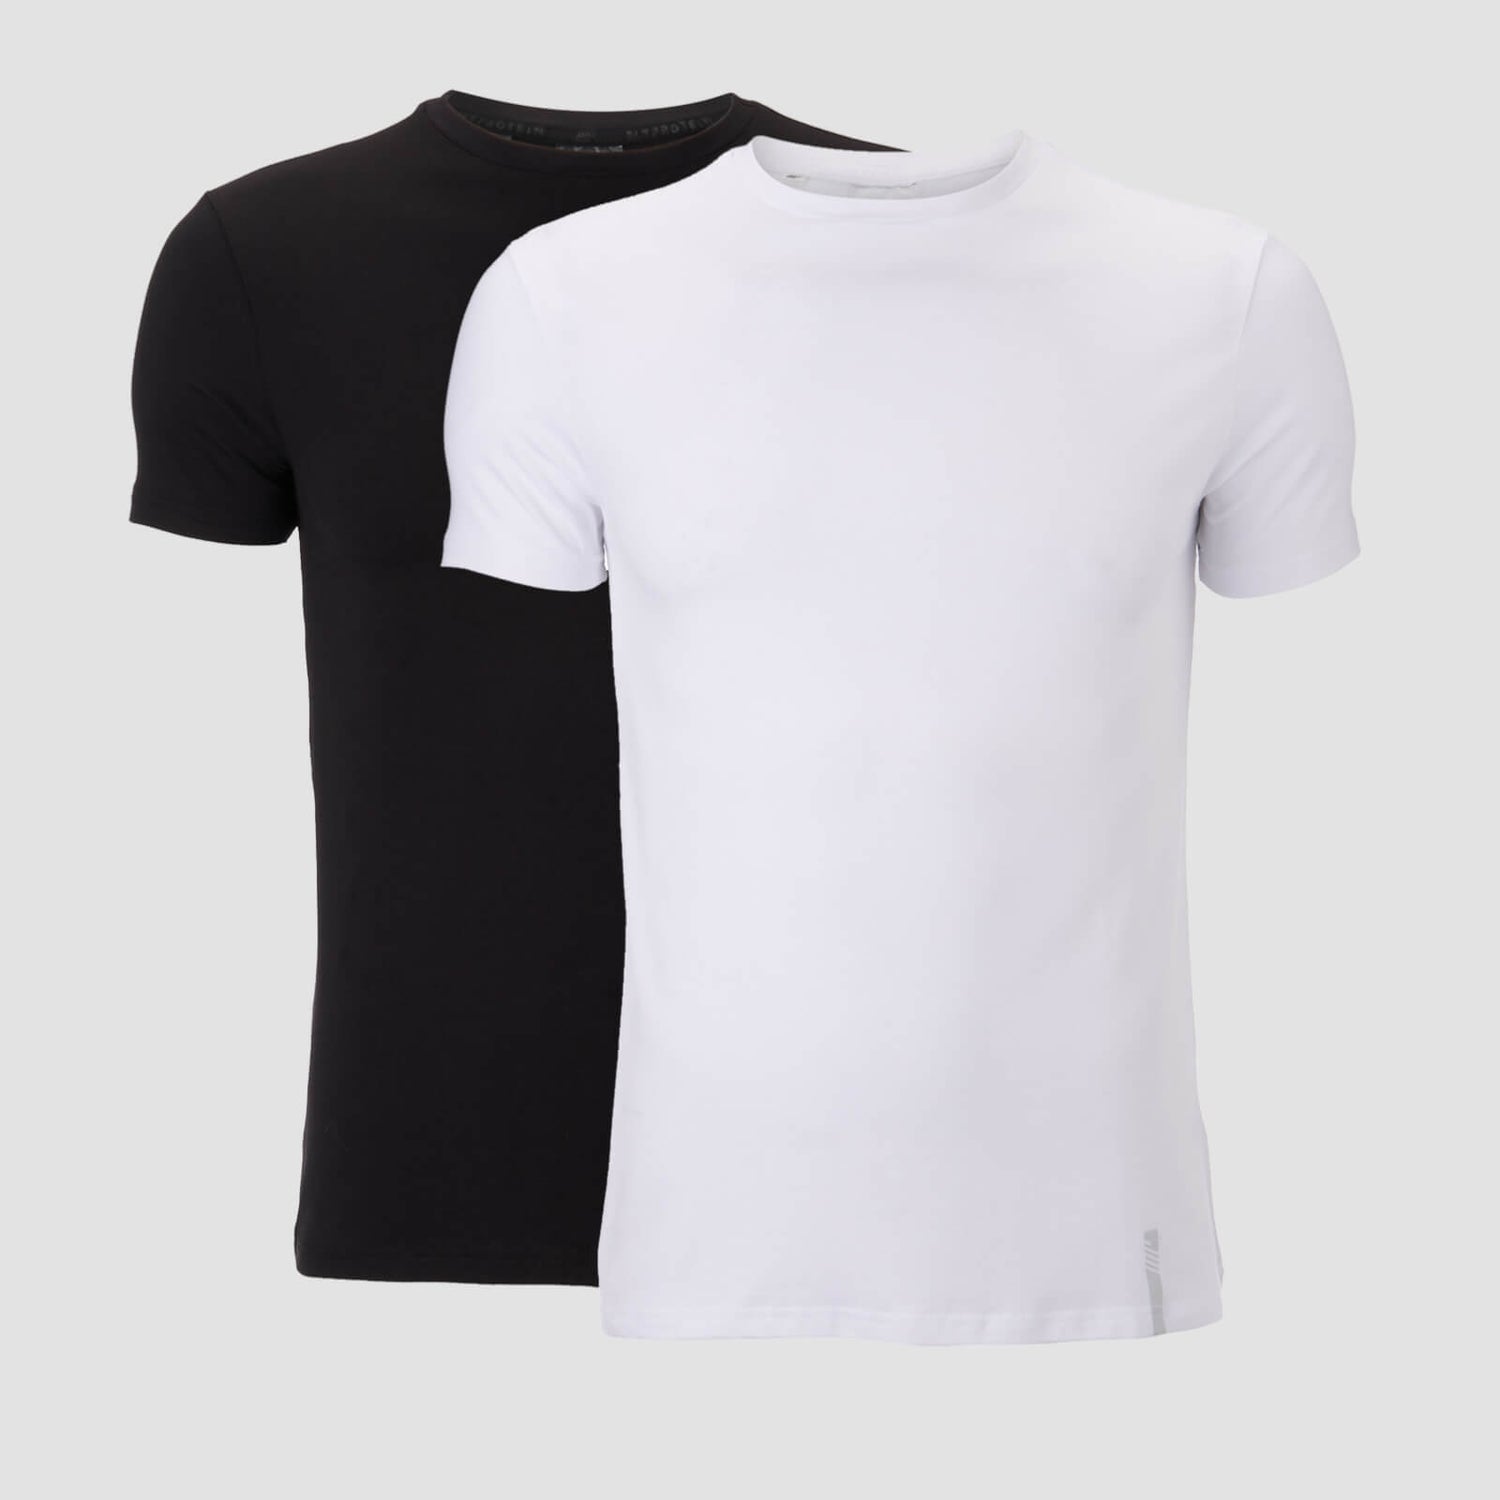 MP muška luksuzna klasična majica s posadom - Black/White (2 pakovanja) - XXL